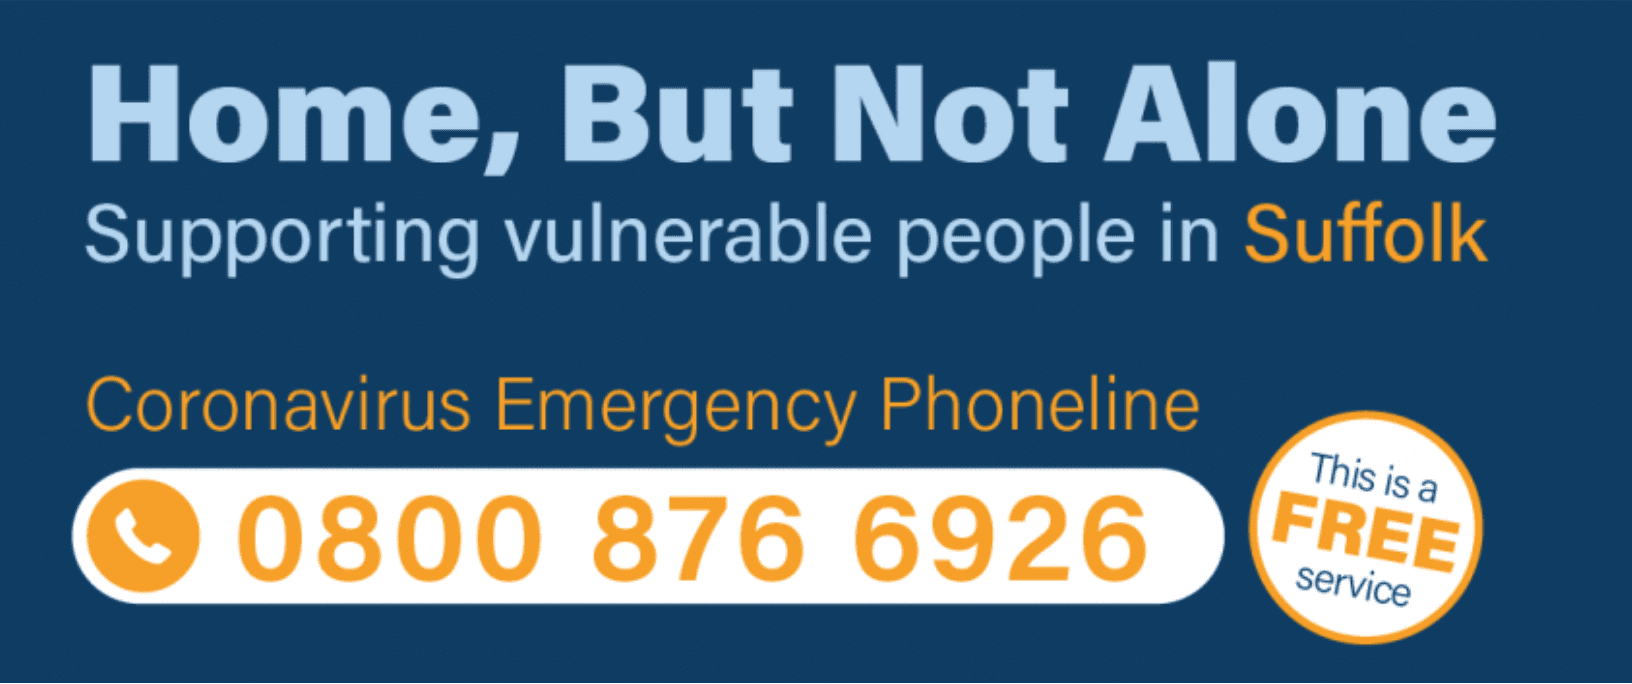 Coronavirus Free Emergency Helpline 0800 876 6926